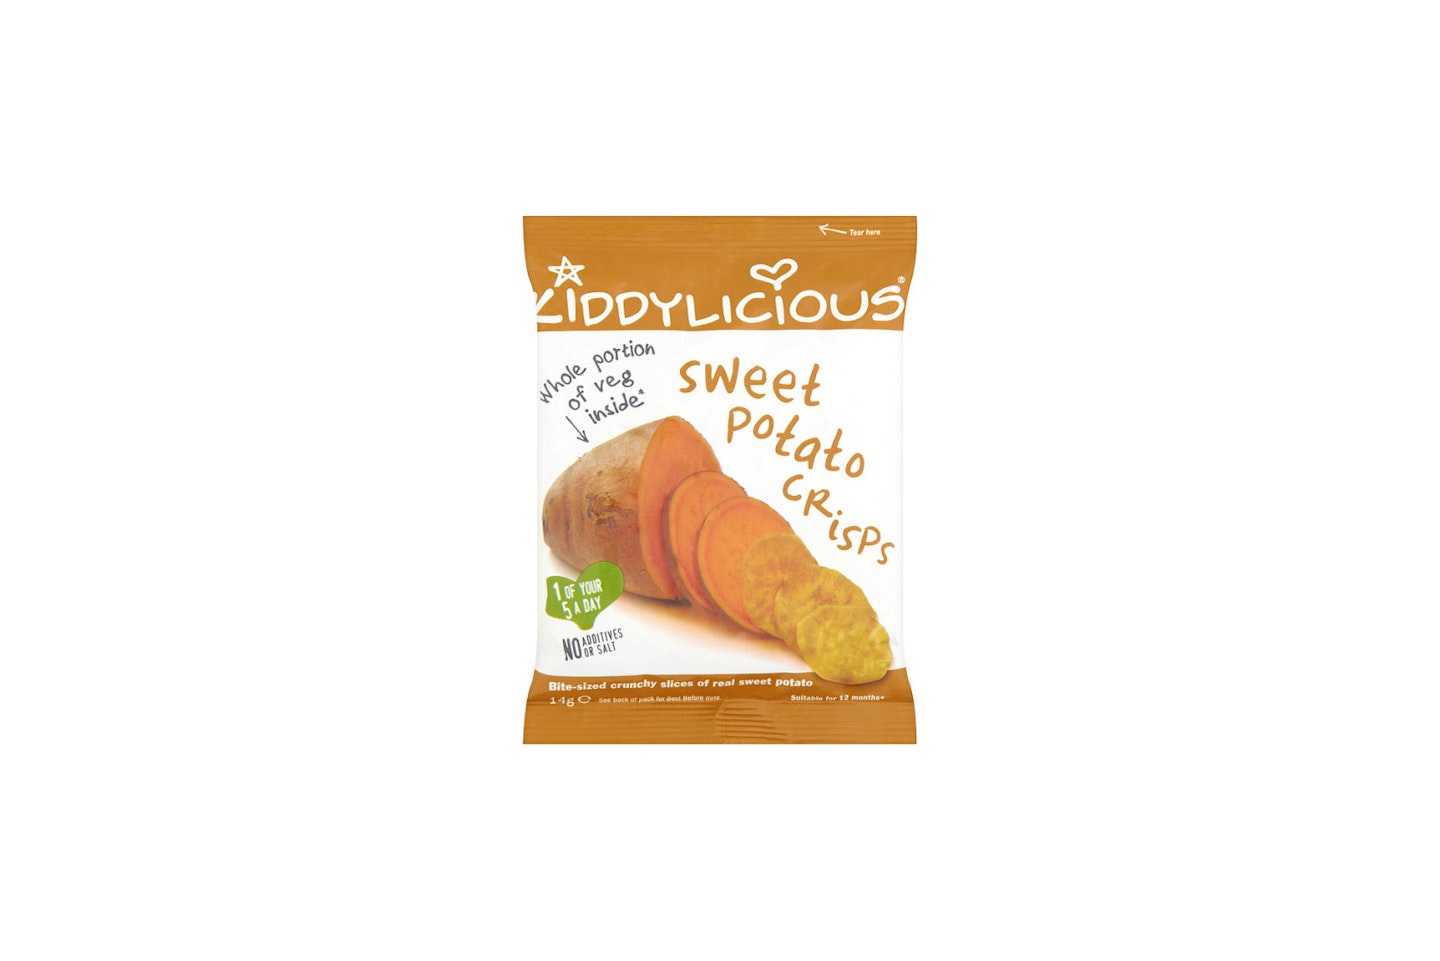 Kiddylicious Sweet Potato Crisps, £0.70